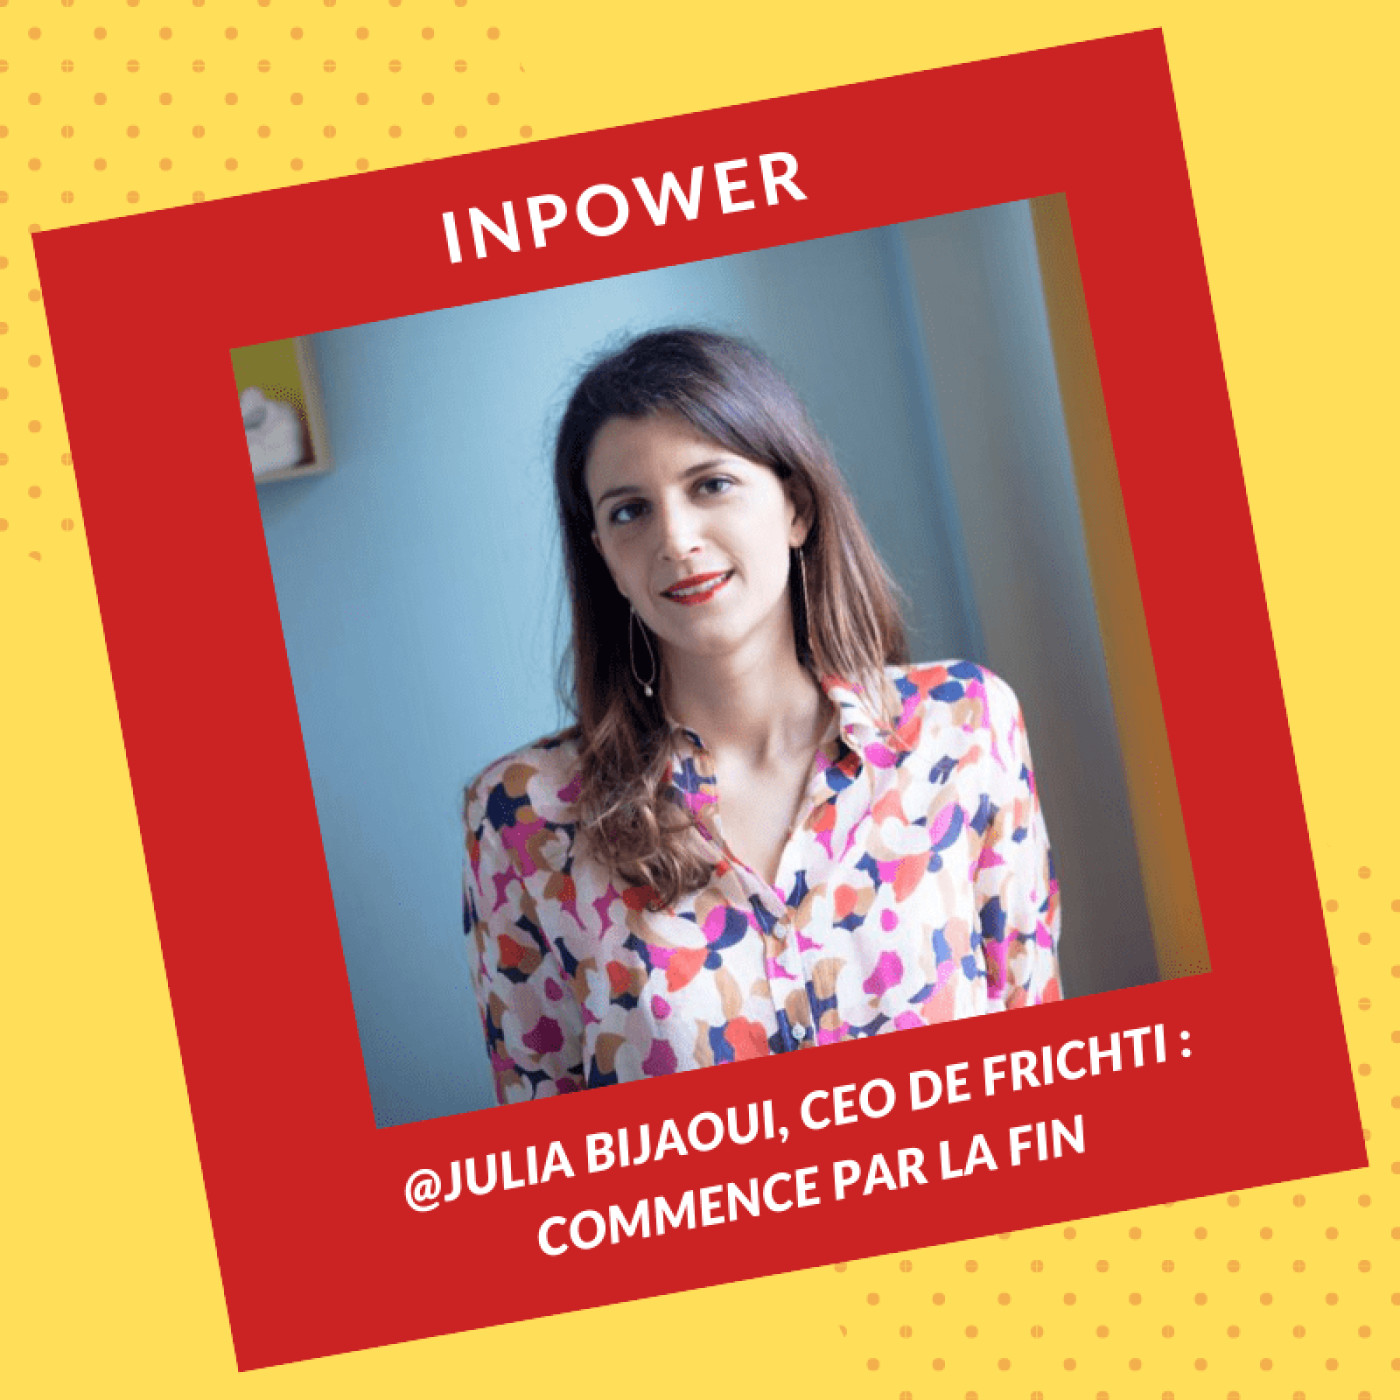 Julia Bijaoui, CEO de Frichti - Commence par la fin